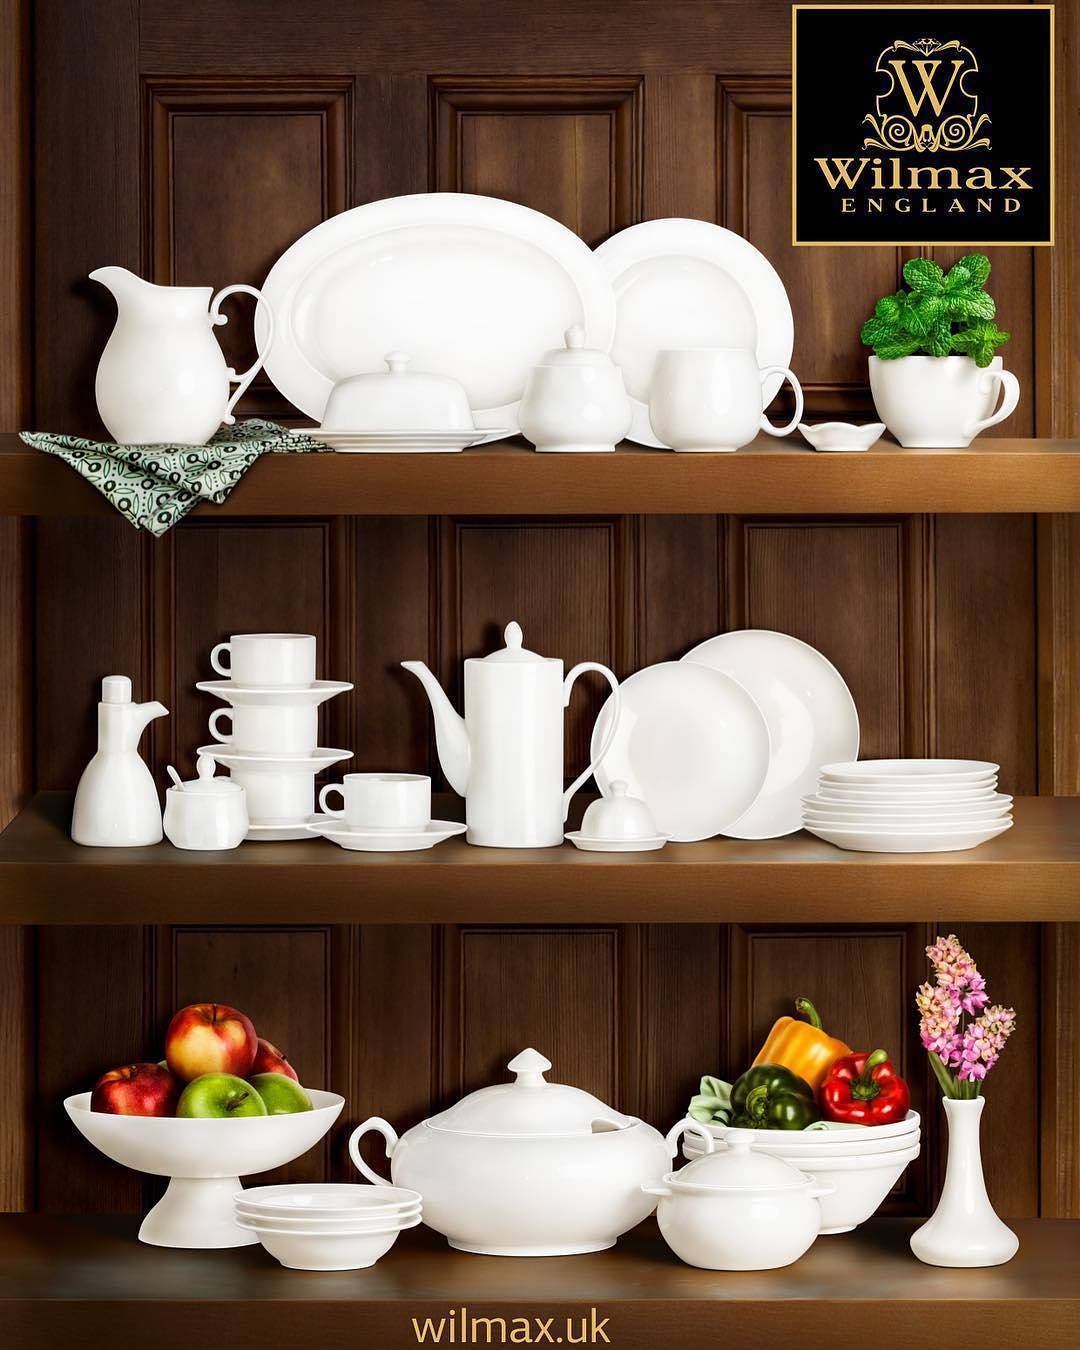 Wilmax Fine Porcelain Deep Plate 10" | 25.5 Cm  20 Oz | 600 Ml SKU: WL-991218/A